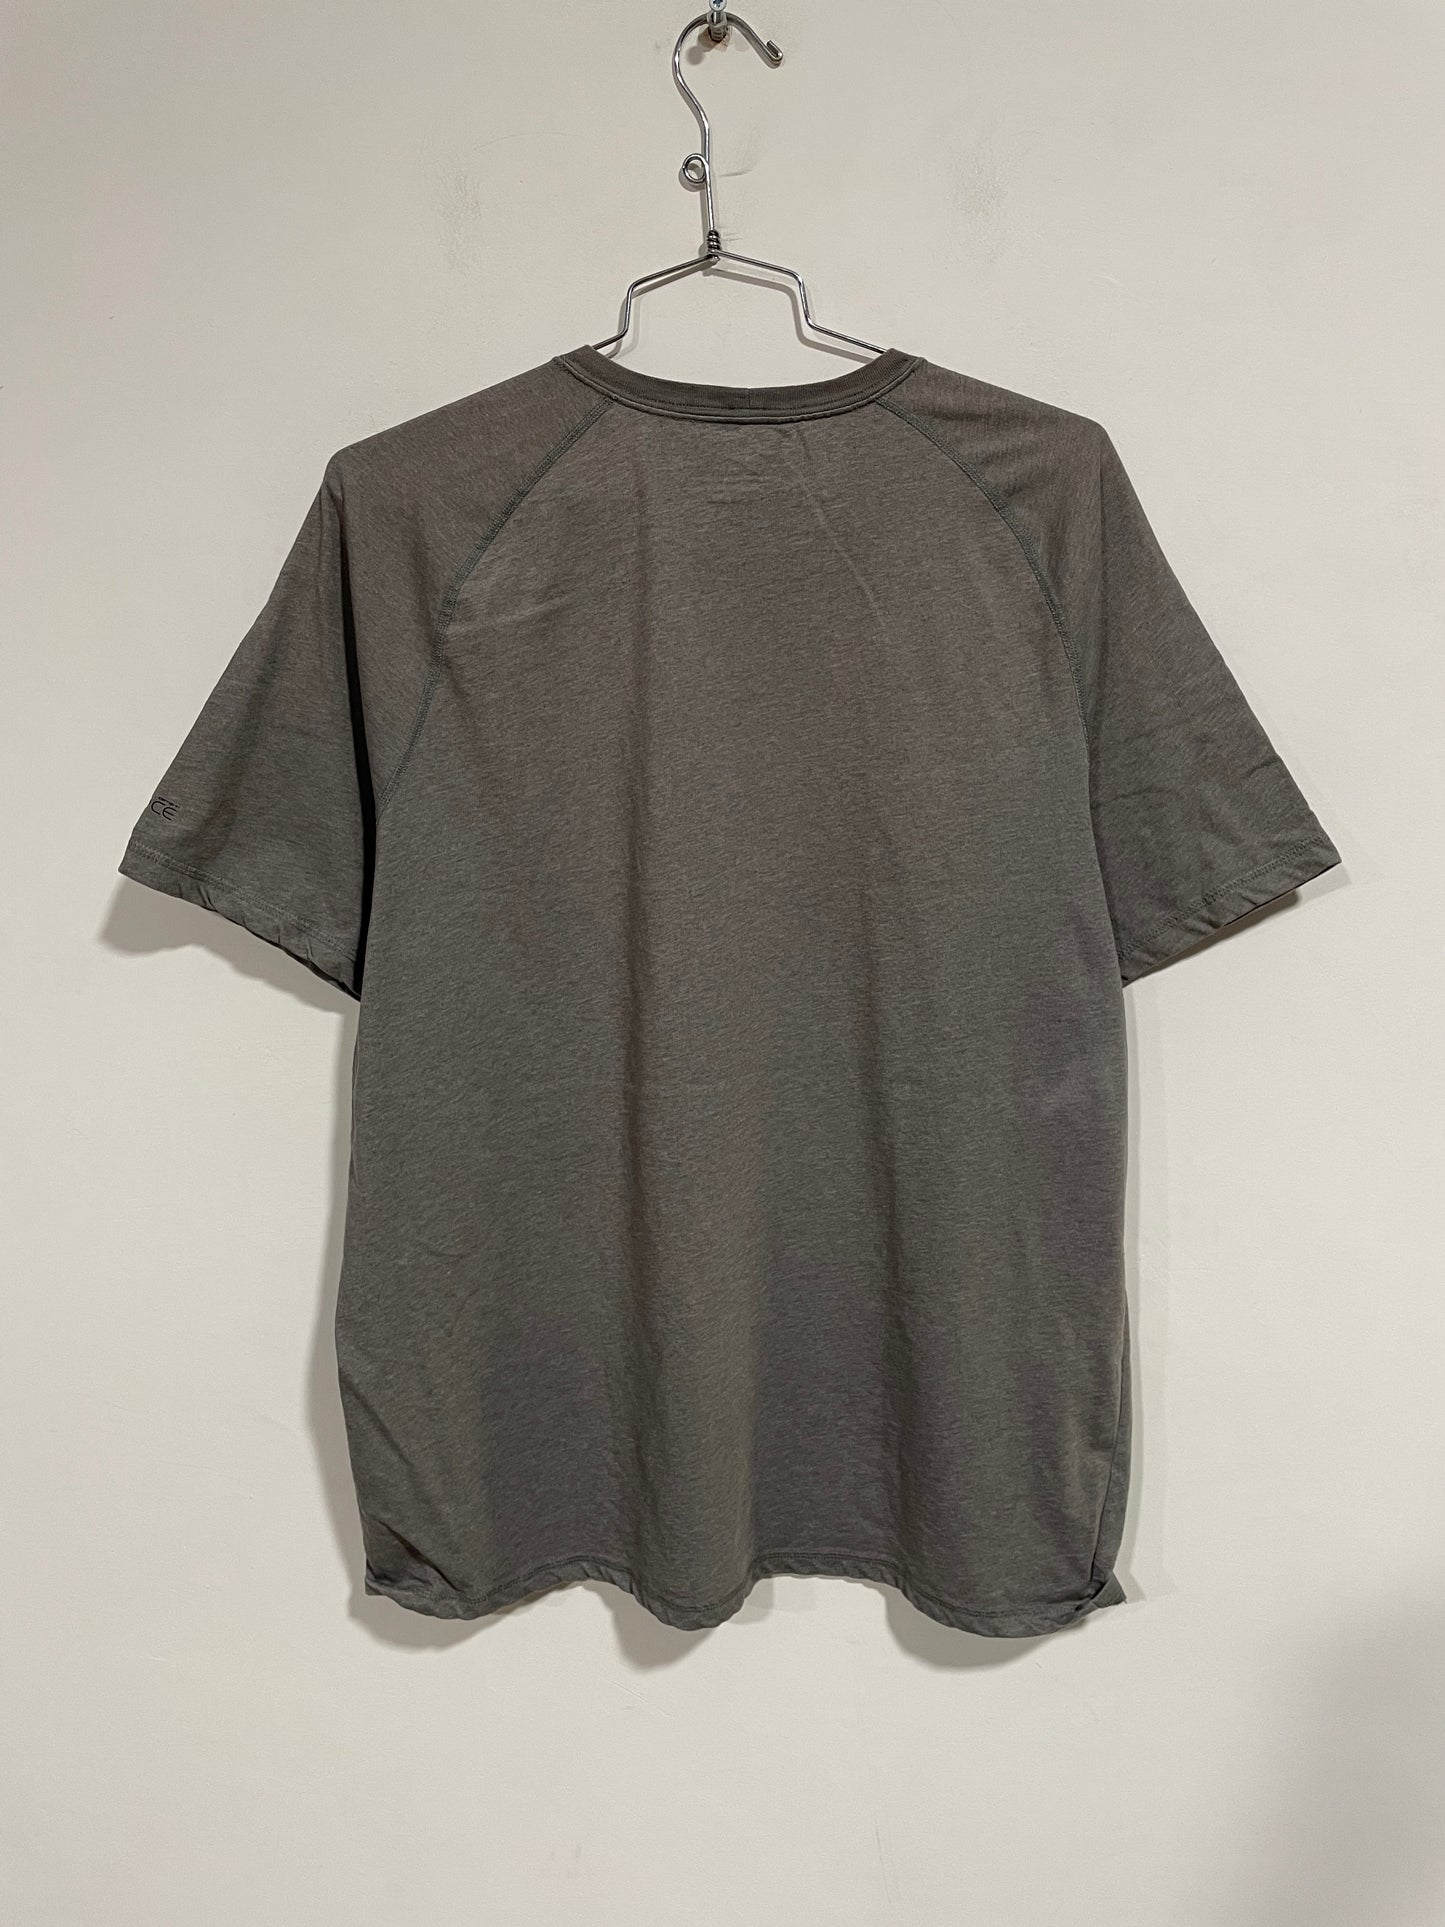 T shirt Carhartt workwear (C406)